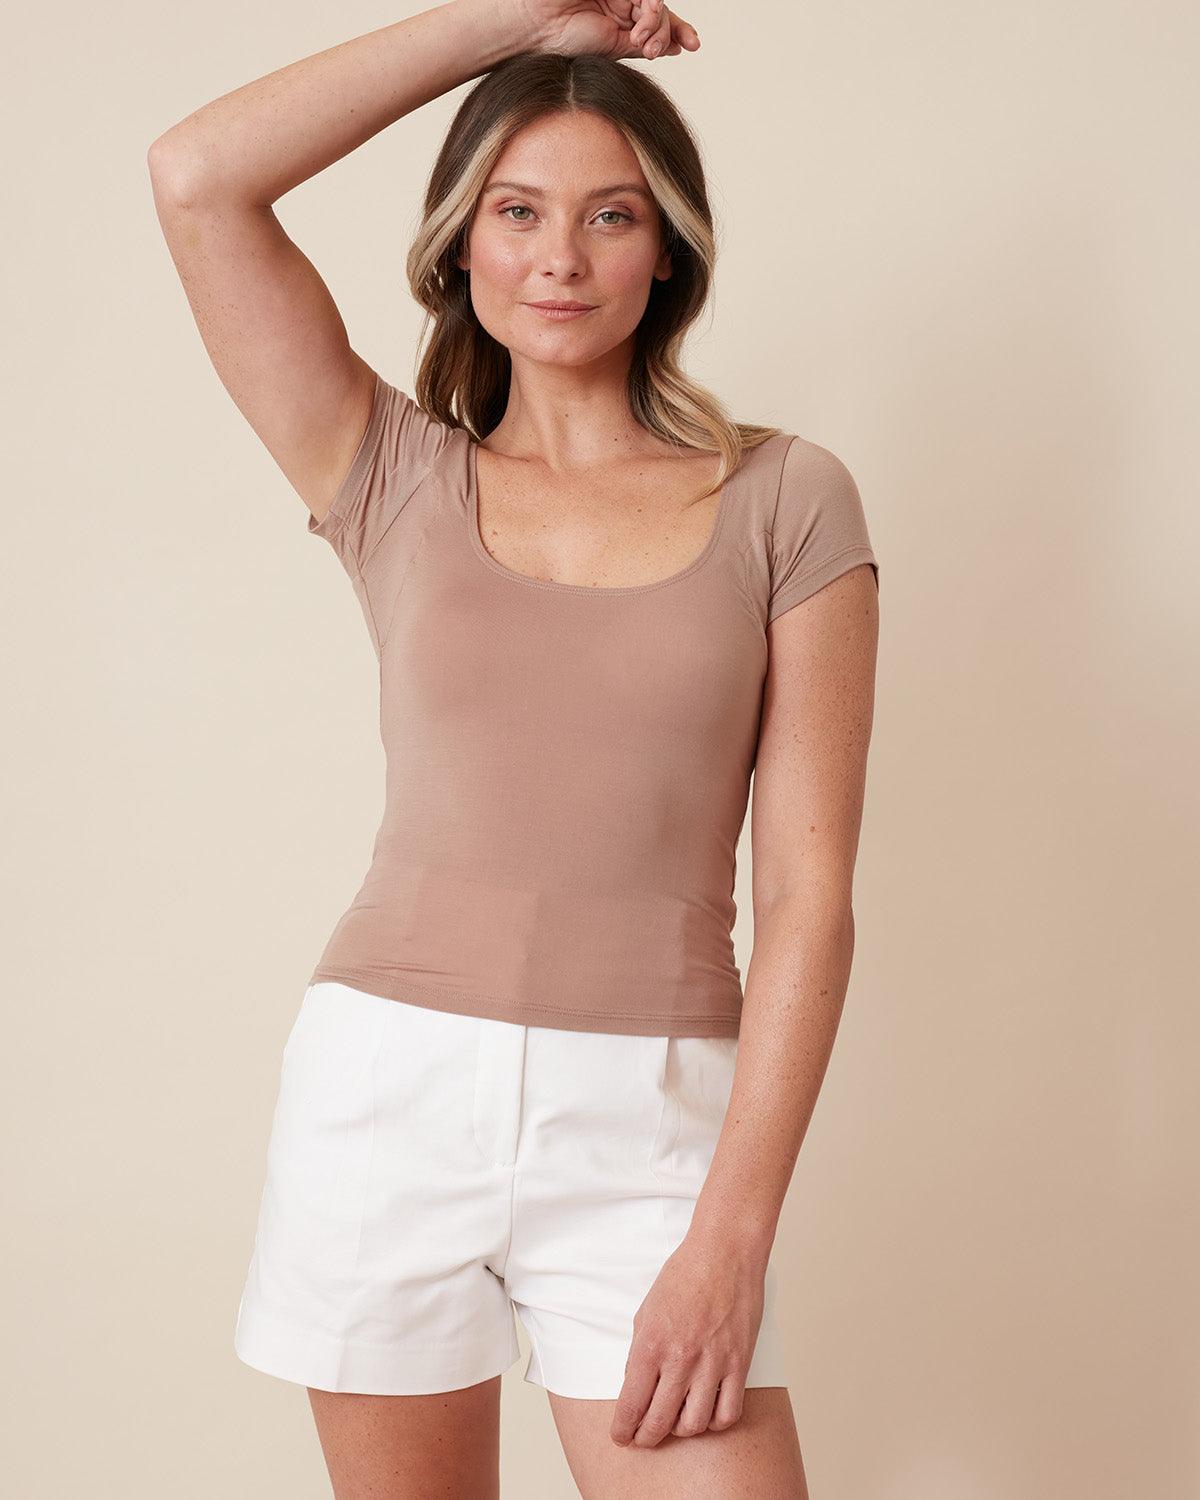 What's New - NUMI Undershirts for Women - Sweatproof Undershirts